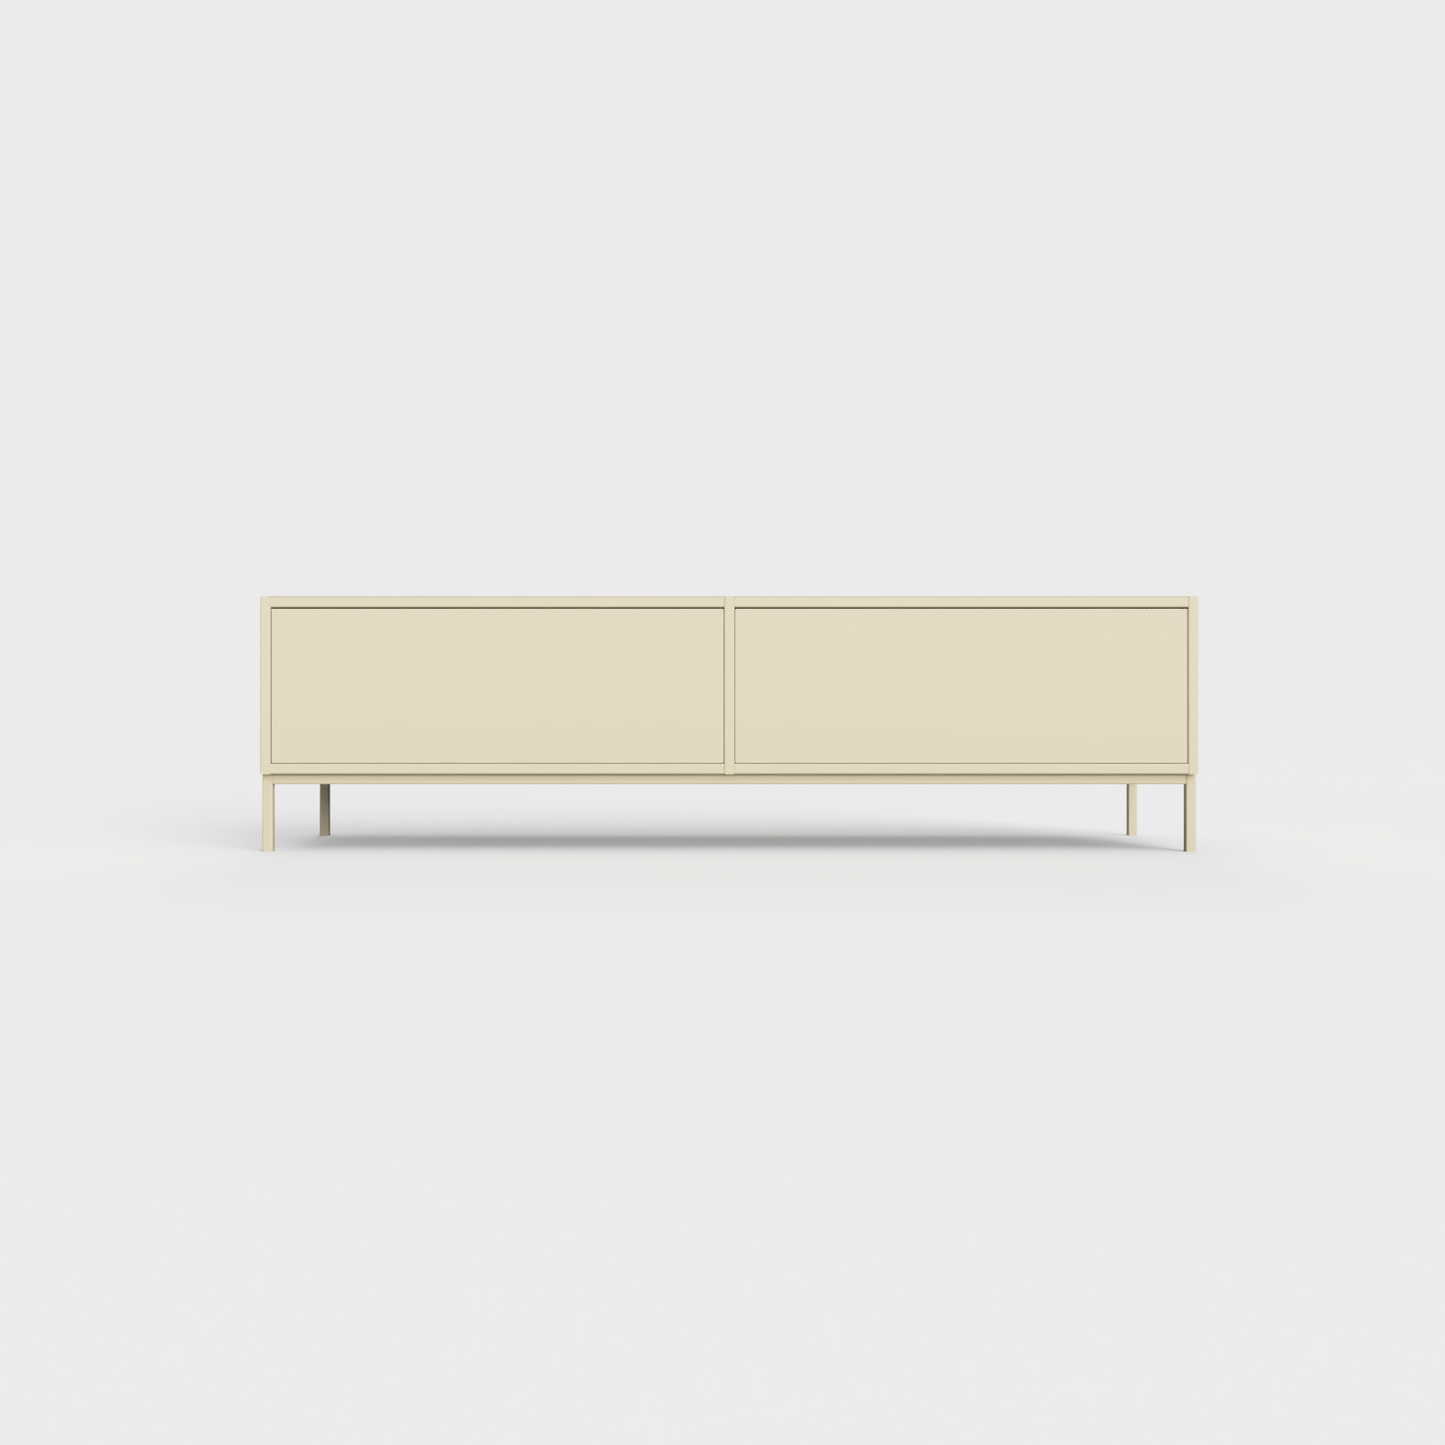 Prunus 01 Lowboard in Dark Ecru color, powder-coated steel, elegant and modern piece of furniture for your living room